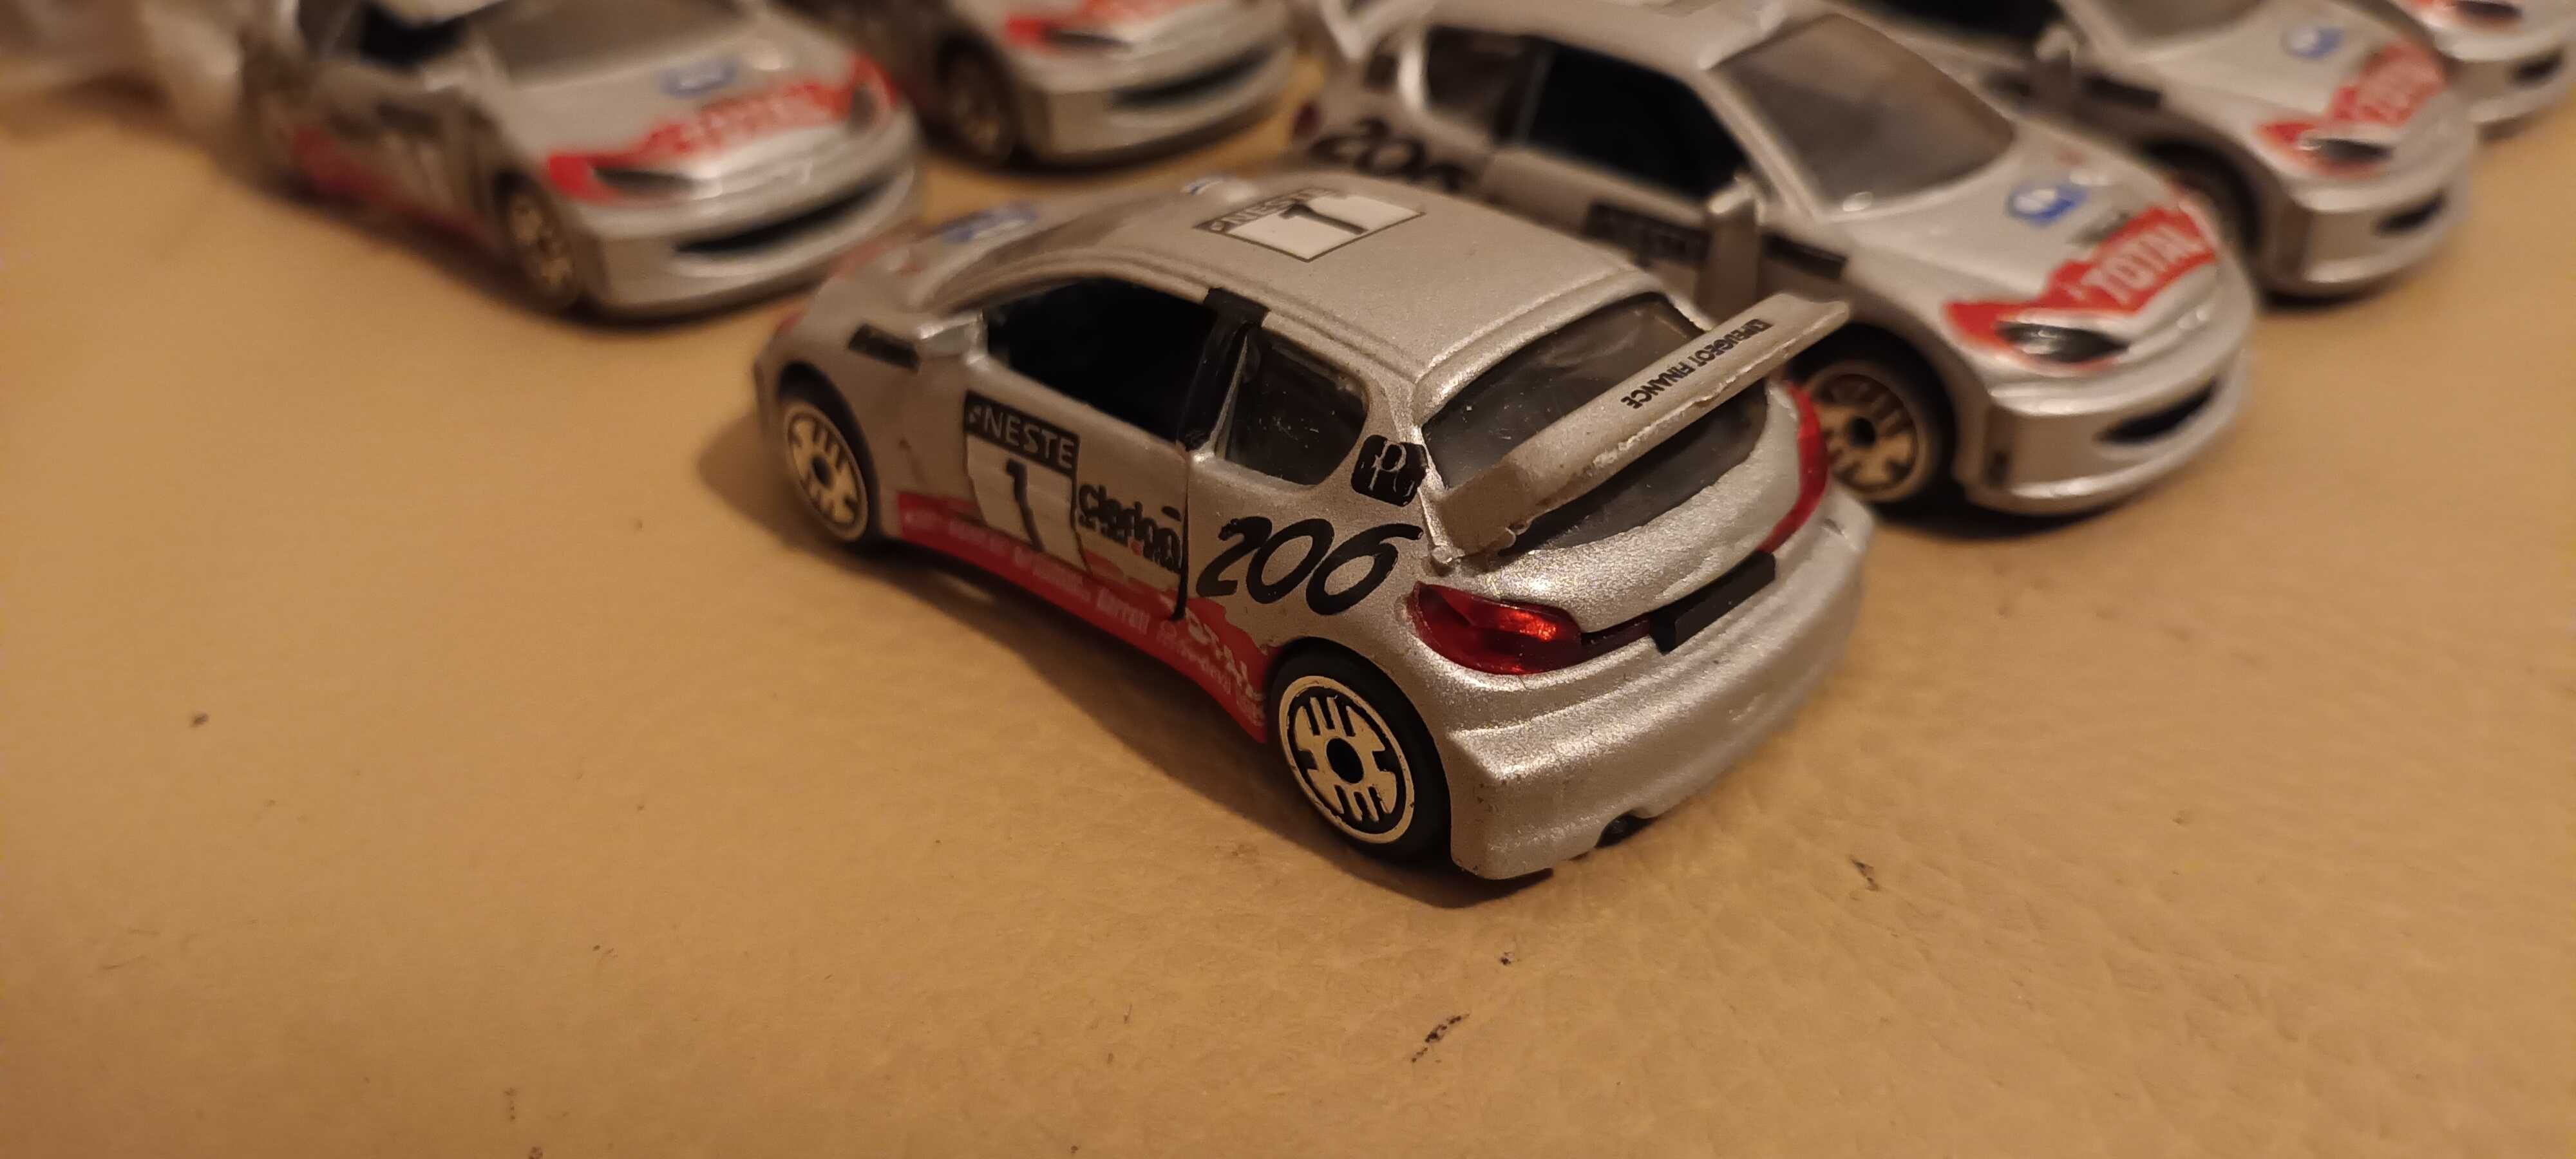 Miniaturas de Peugeot 206 Rally e outros